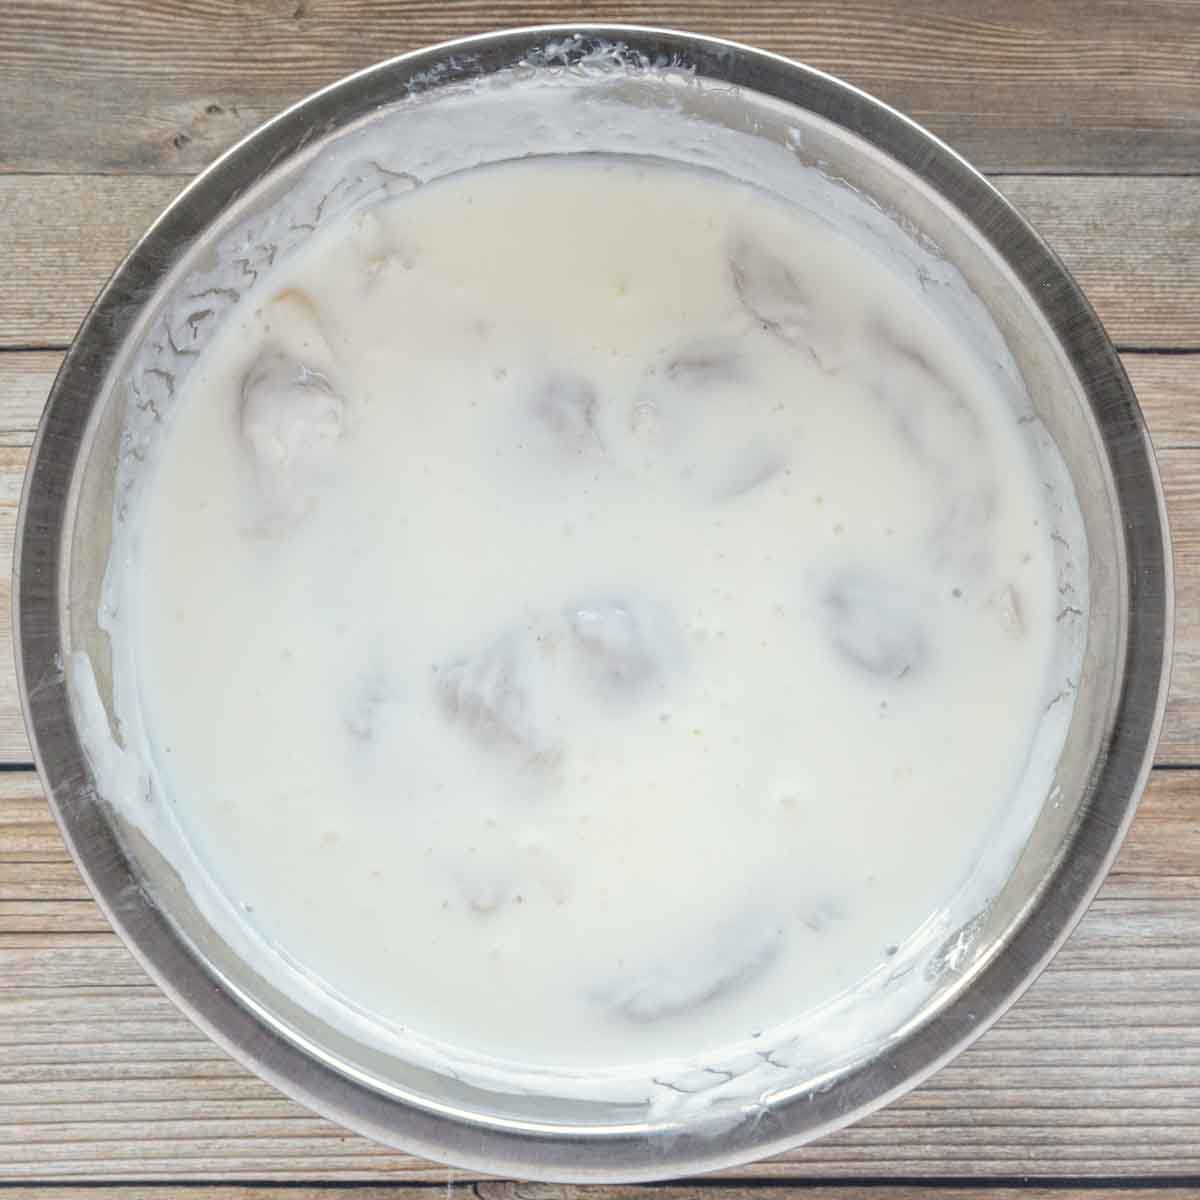 chicken tenders soaking in buttermilk in a stainless steel bowl